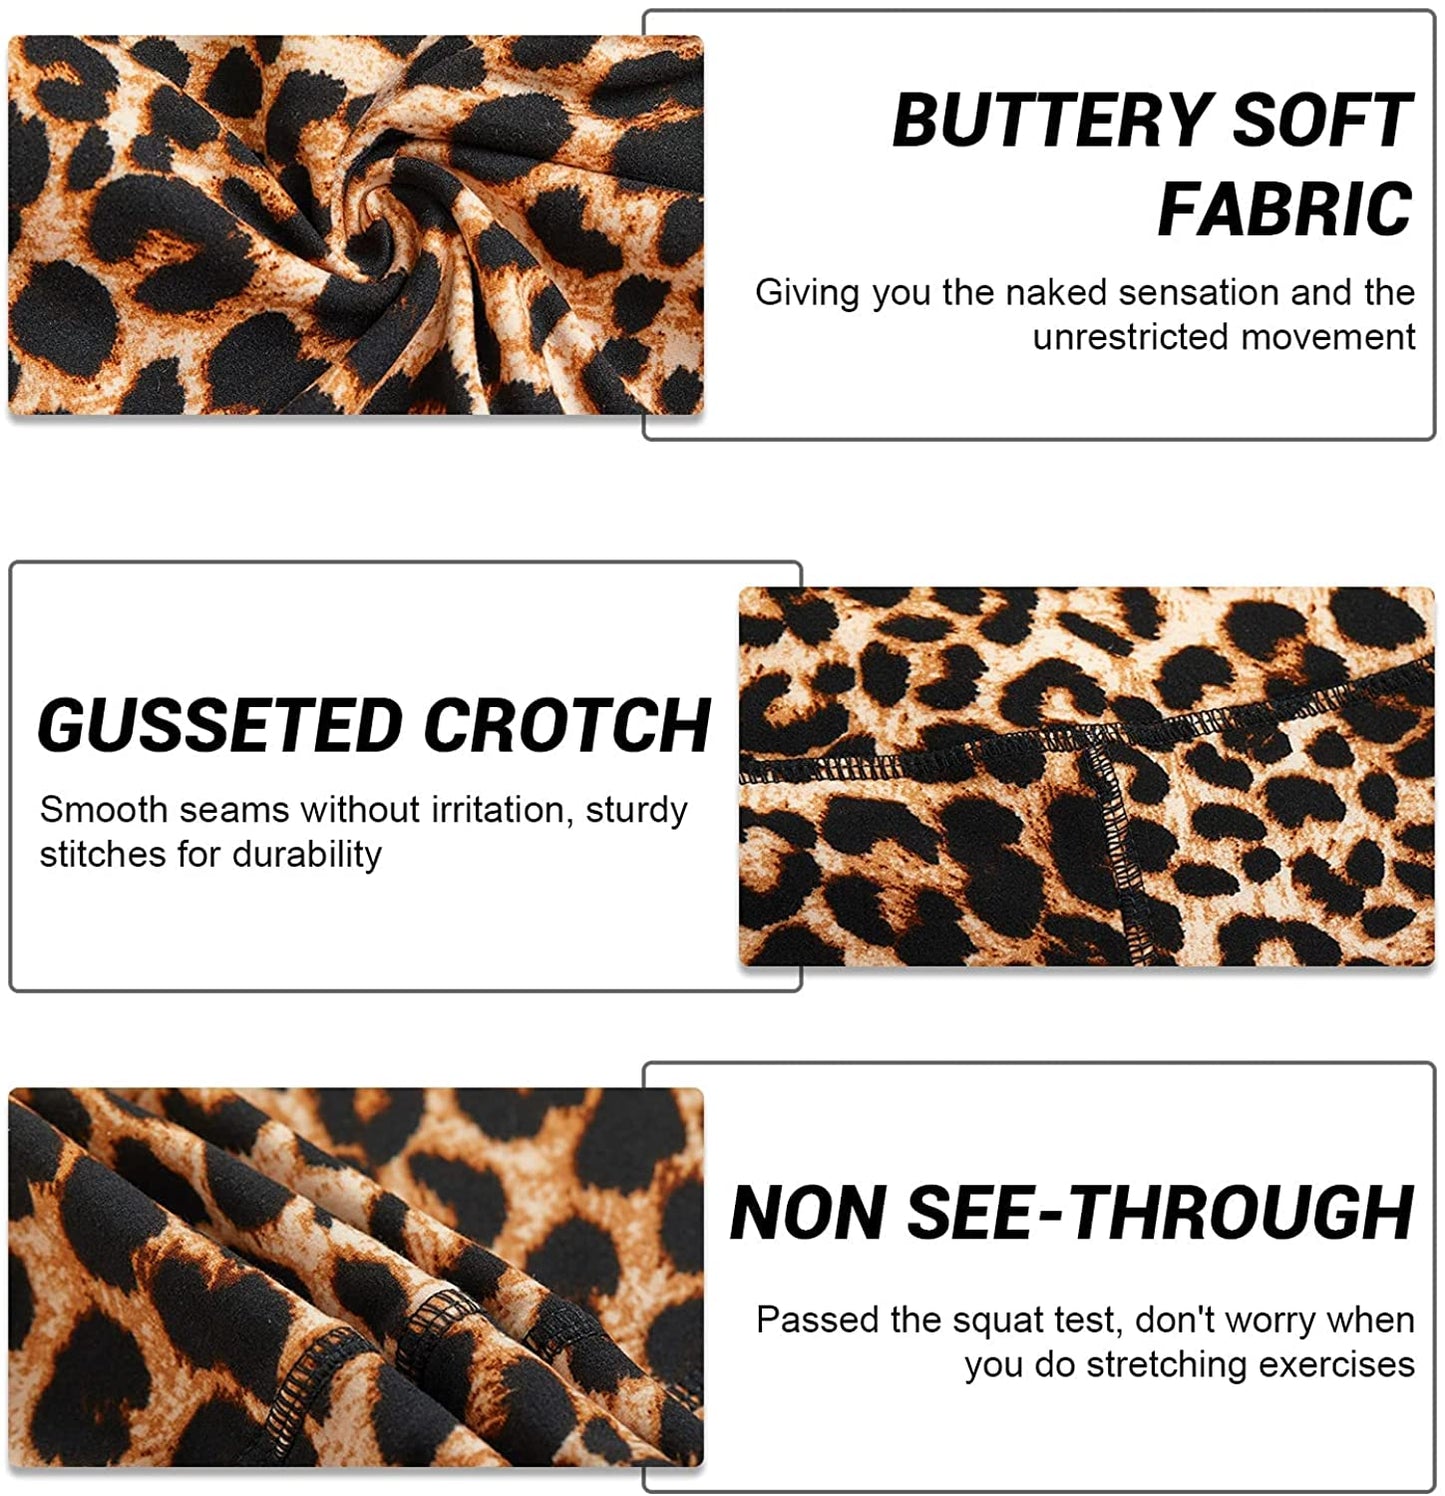 Wholesale High Waisted Leopard Leggings Soft Slim Tummy Control Printed Pants